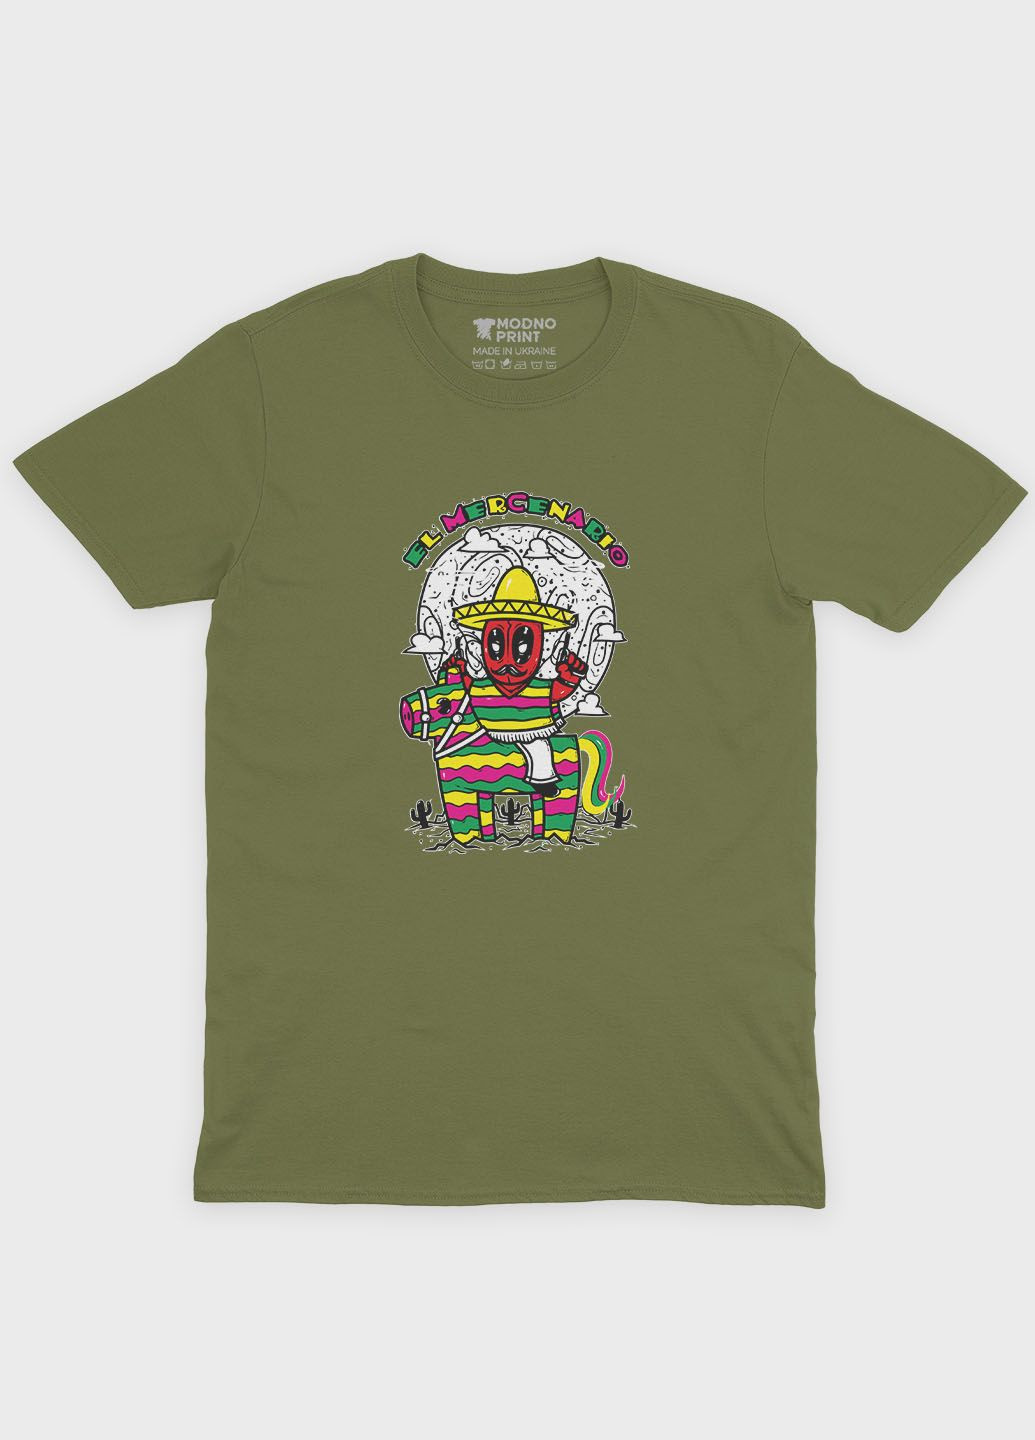 Хаки (оливковая) летняя мужская футболка с принтом антигероя - дедпул (ts001-1-hgr-006-015-003-f) Modno